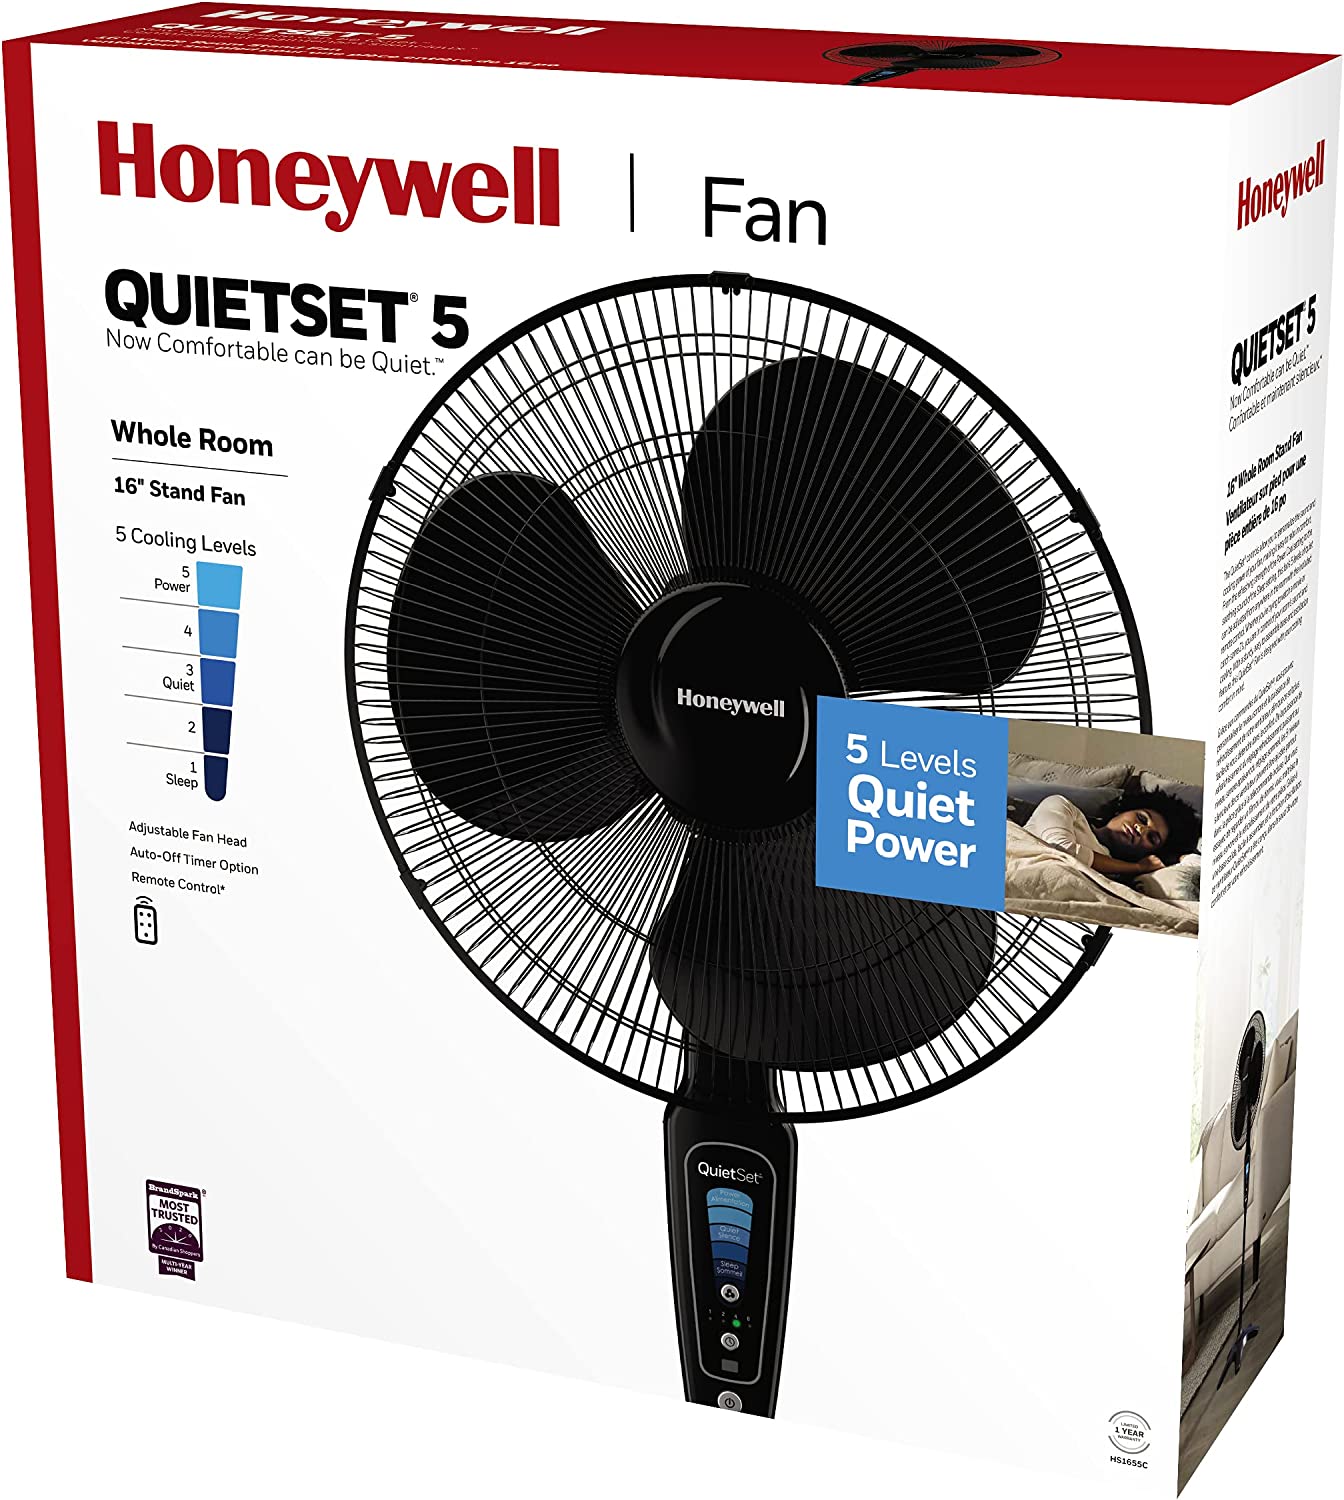 Honeywell Quietset 5 HS1655C Stand Fan - Open Box